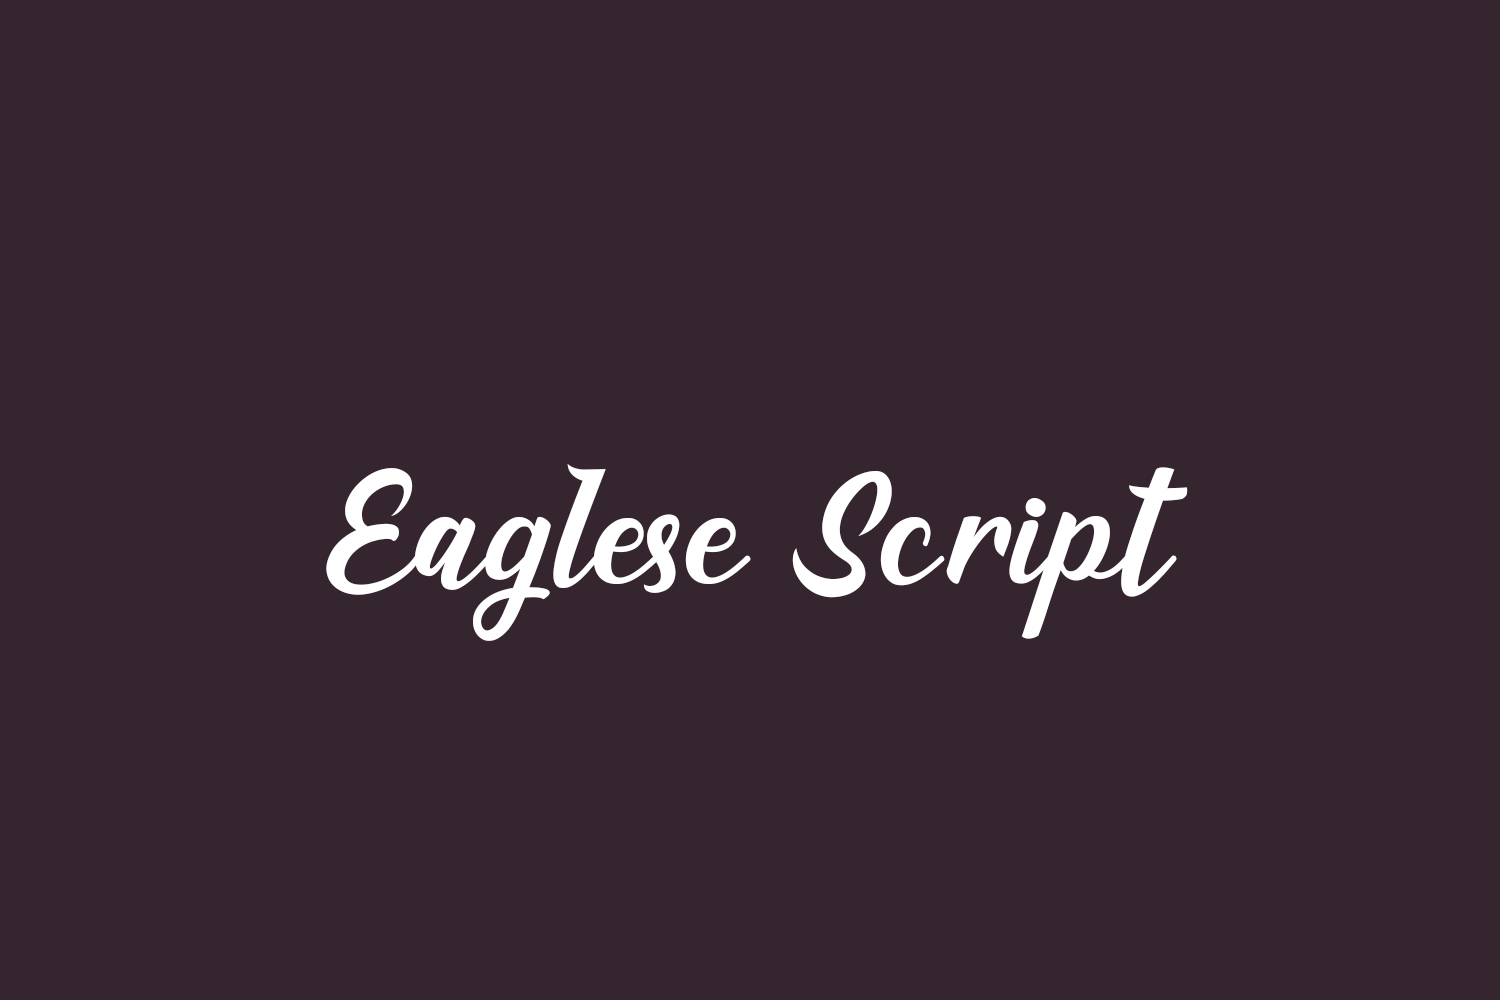 Eaglese Script Free Font